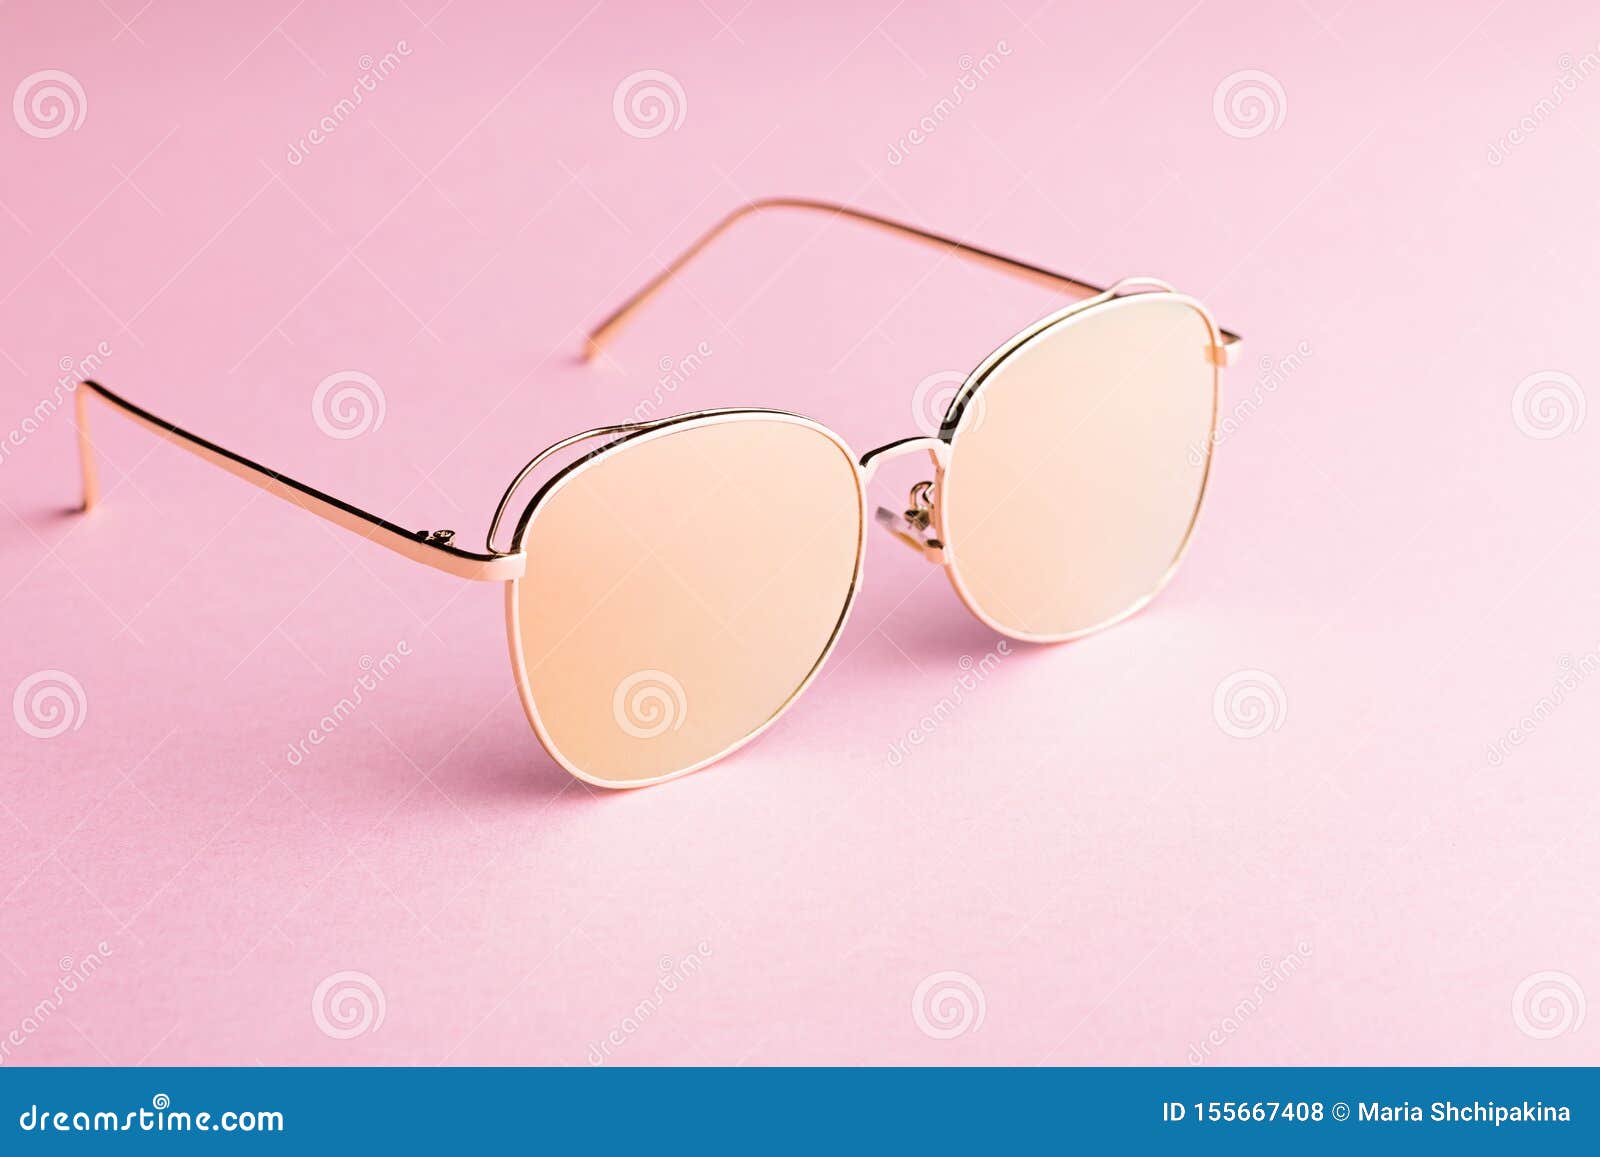 Flat Lens Mirrored Sunglasses Shop Stock